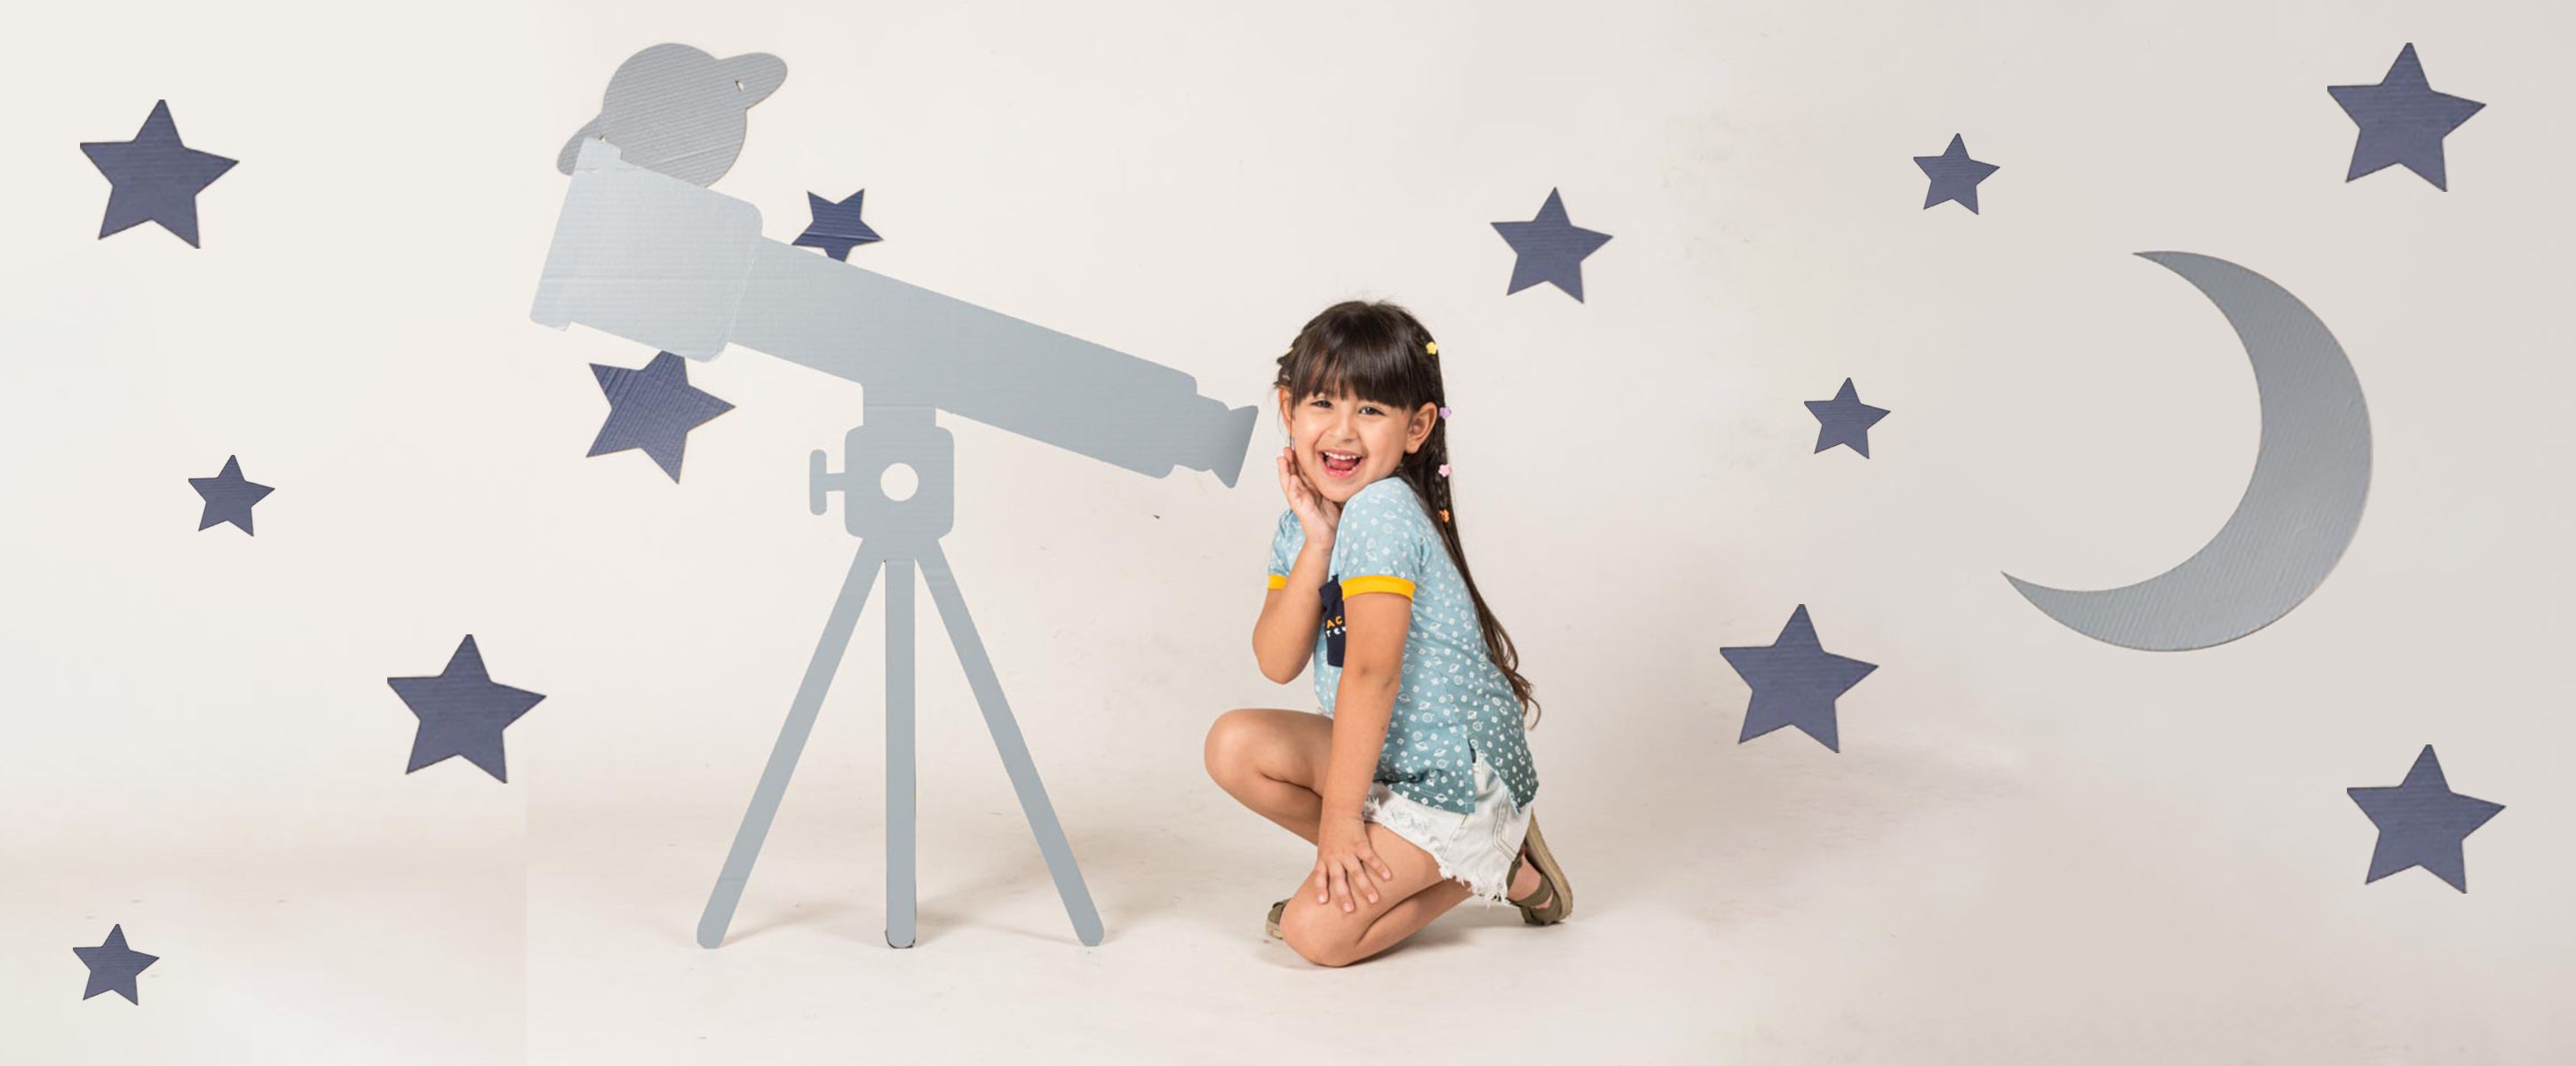 Prisma Kiddos children's clothes brand, inspired on STEM and Gender Empowerment